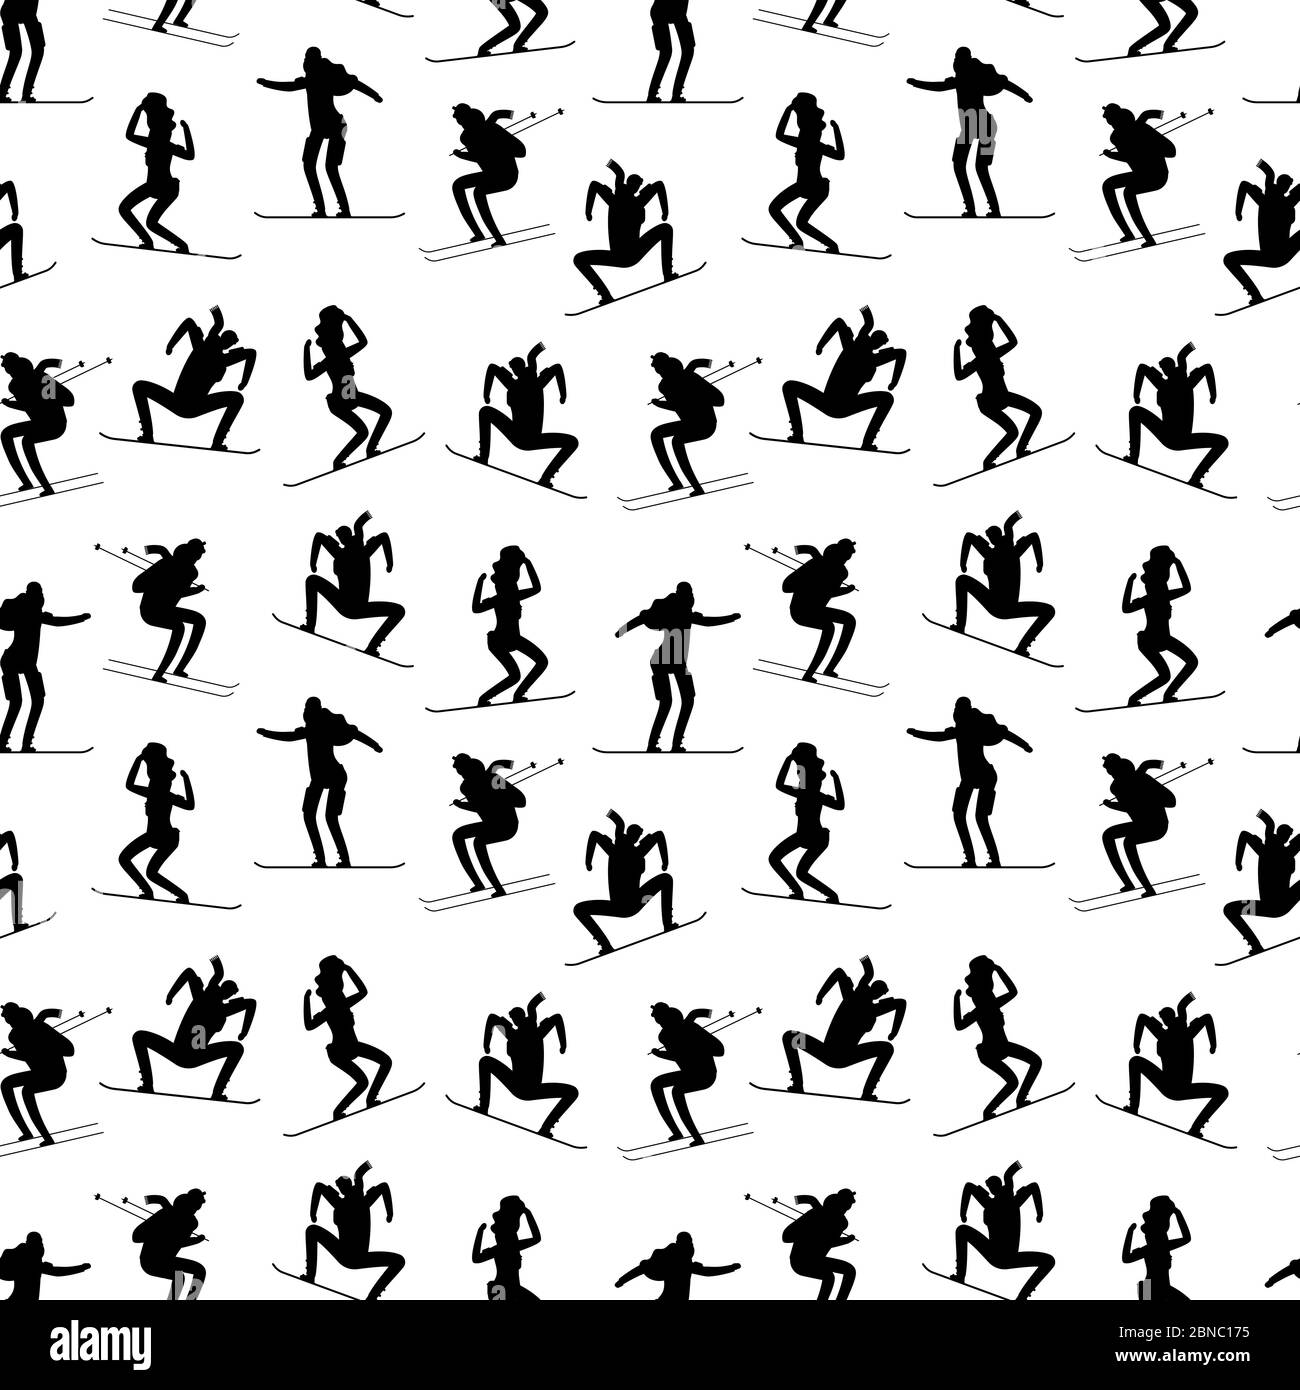 Winter sports athletes seamless pattern. Black sport winter people silhouettes texture. Vector illustration Stock Vector